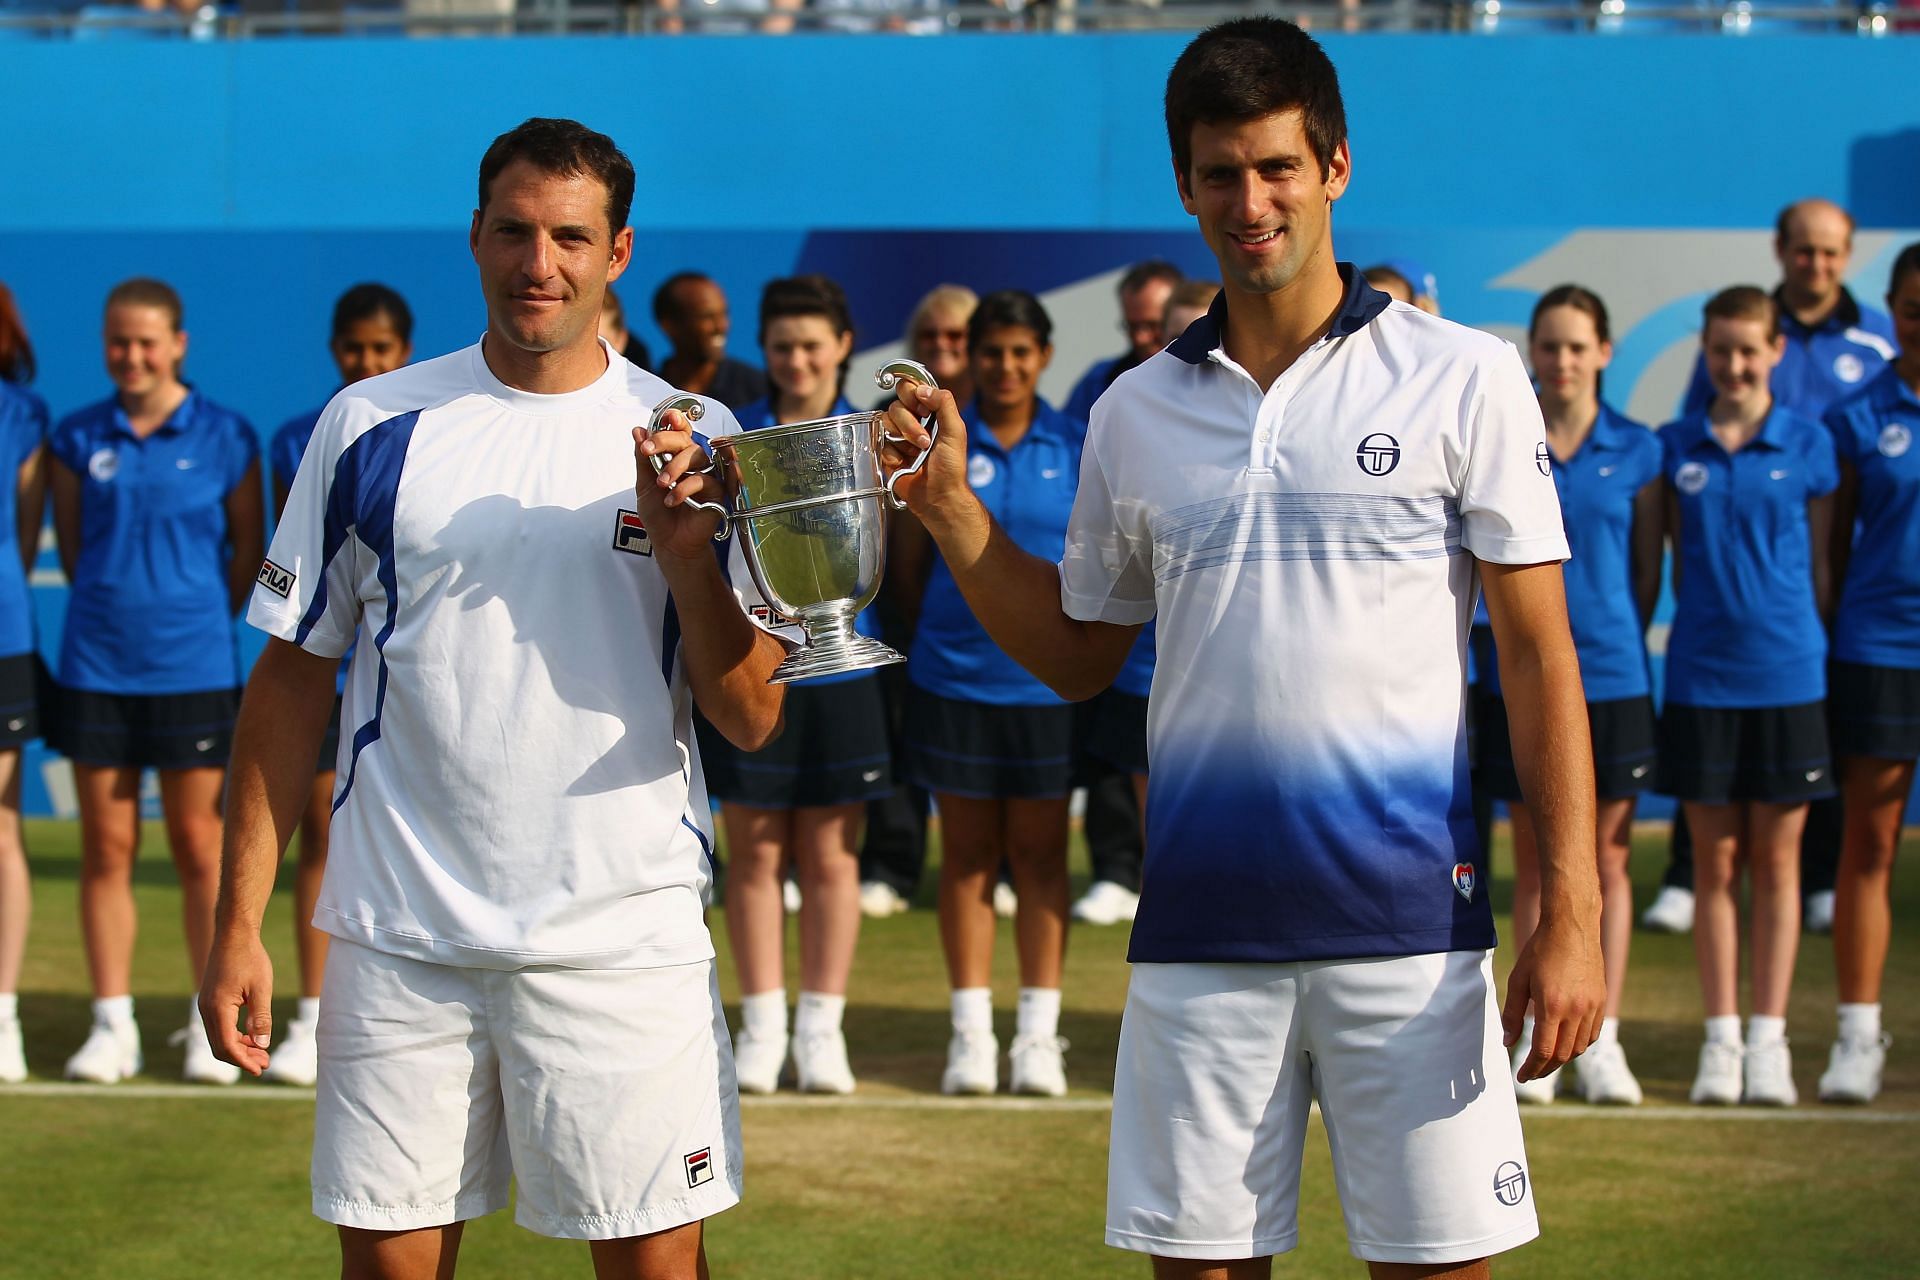 Novak Djokovic with Jonathan Erlich after winning AEGON Championships in 2010.